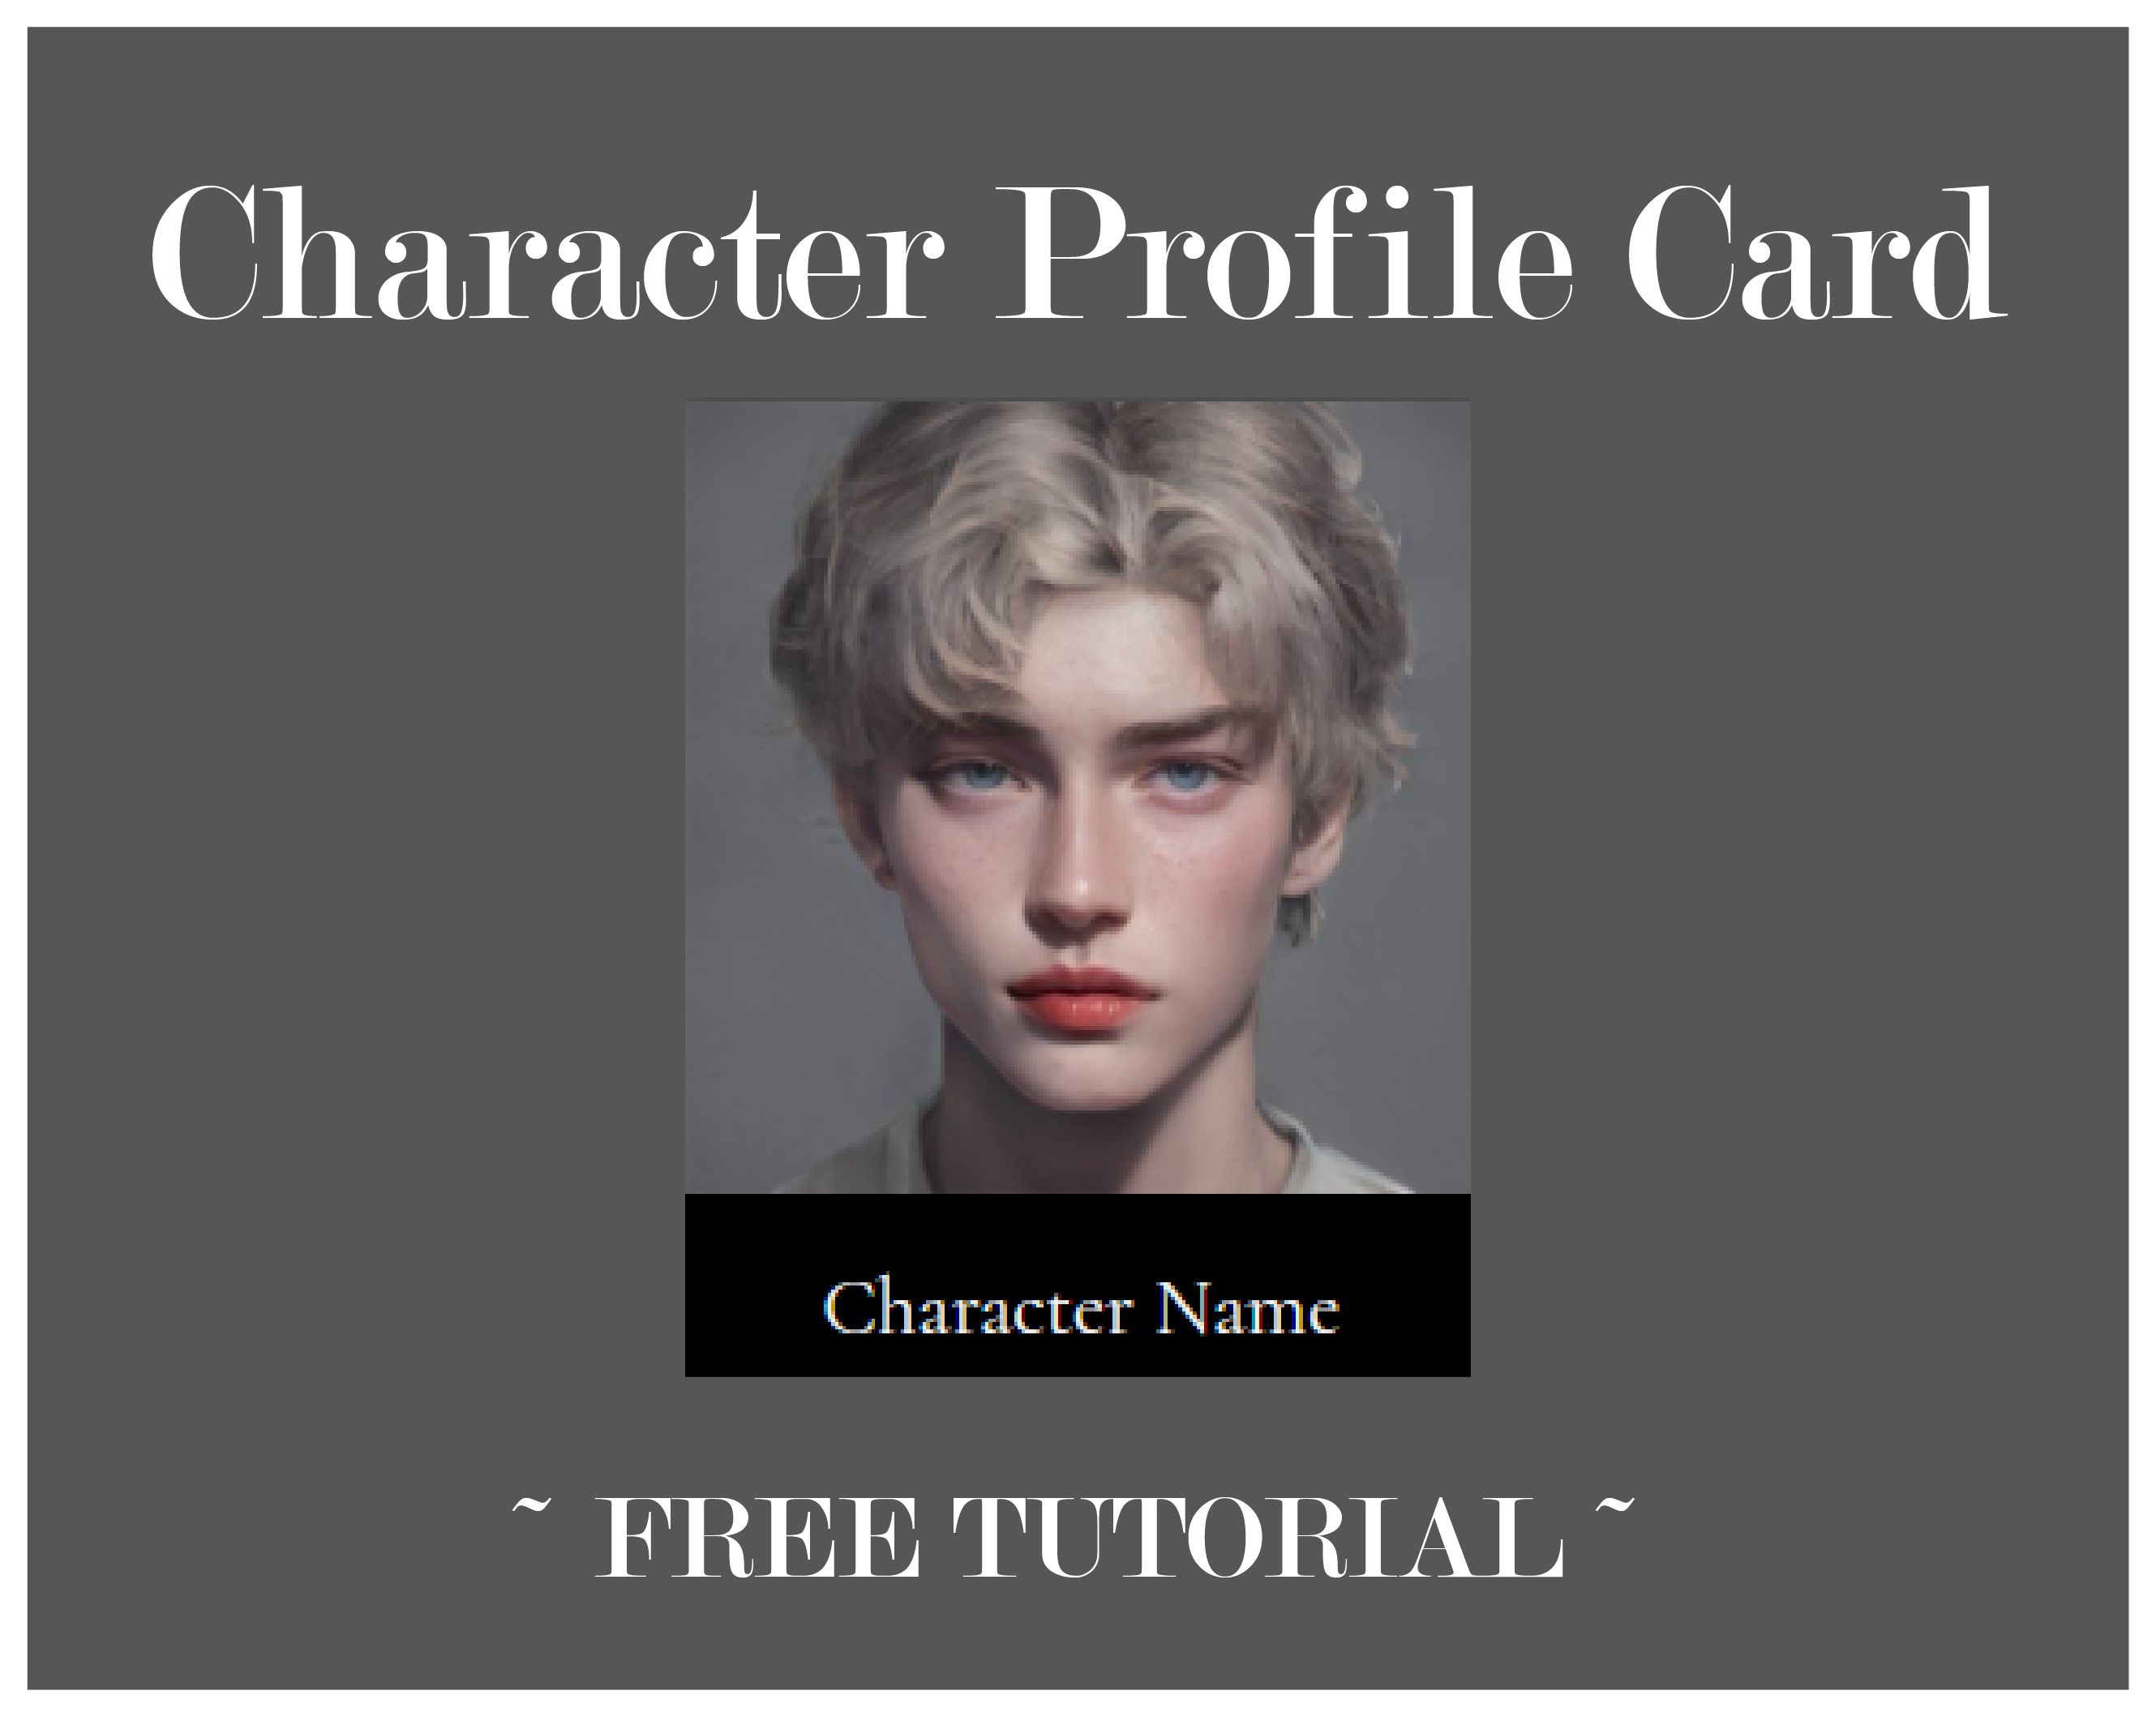 devlog-character-profile-card-tutorial-twine-sugarcube-by-jasmineta